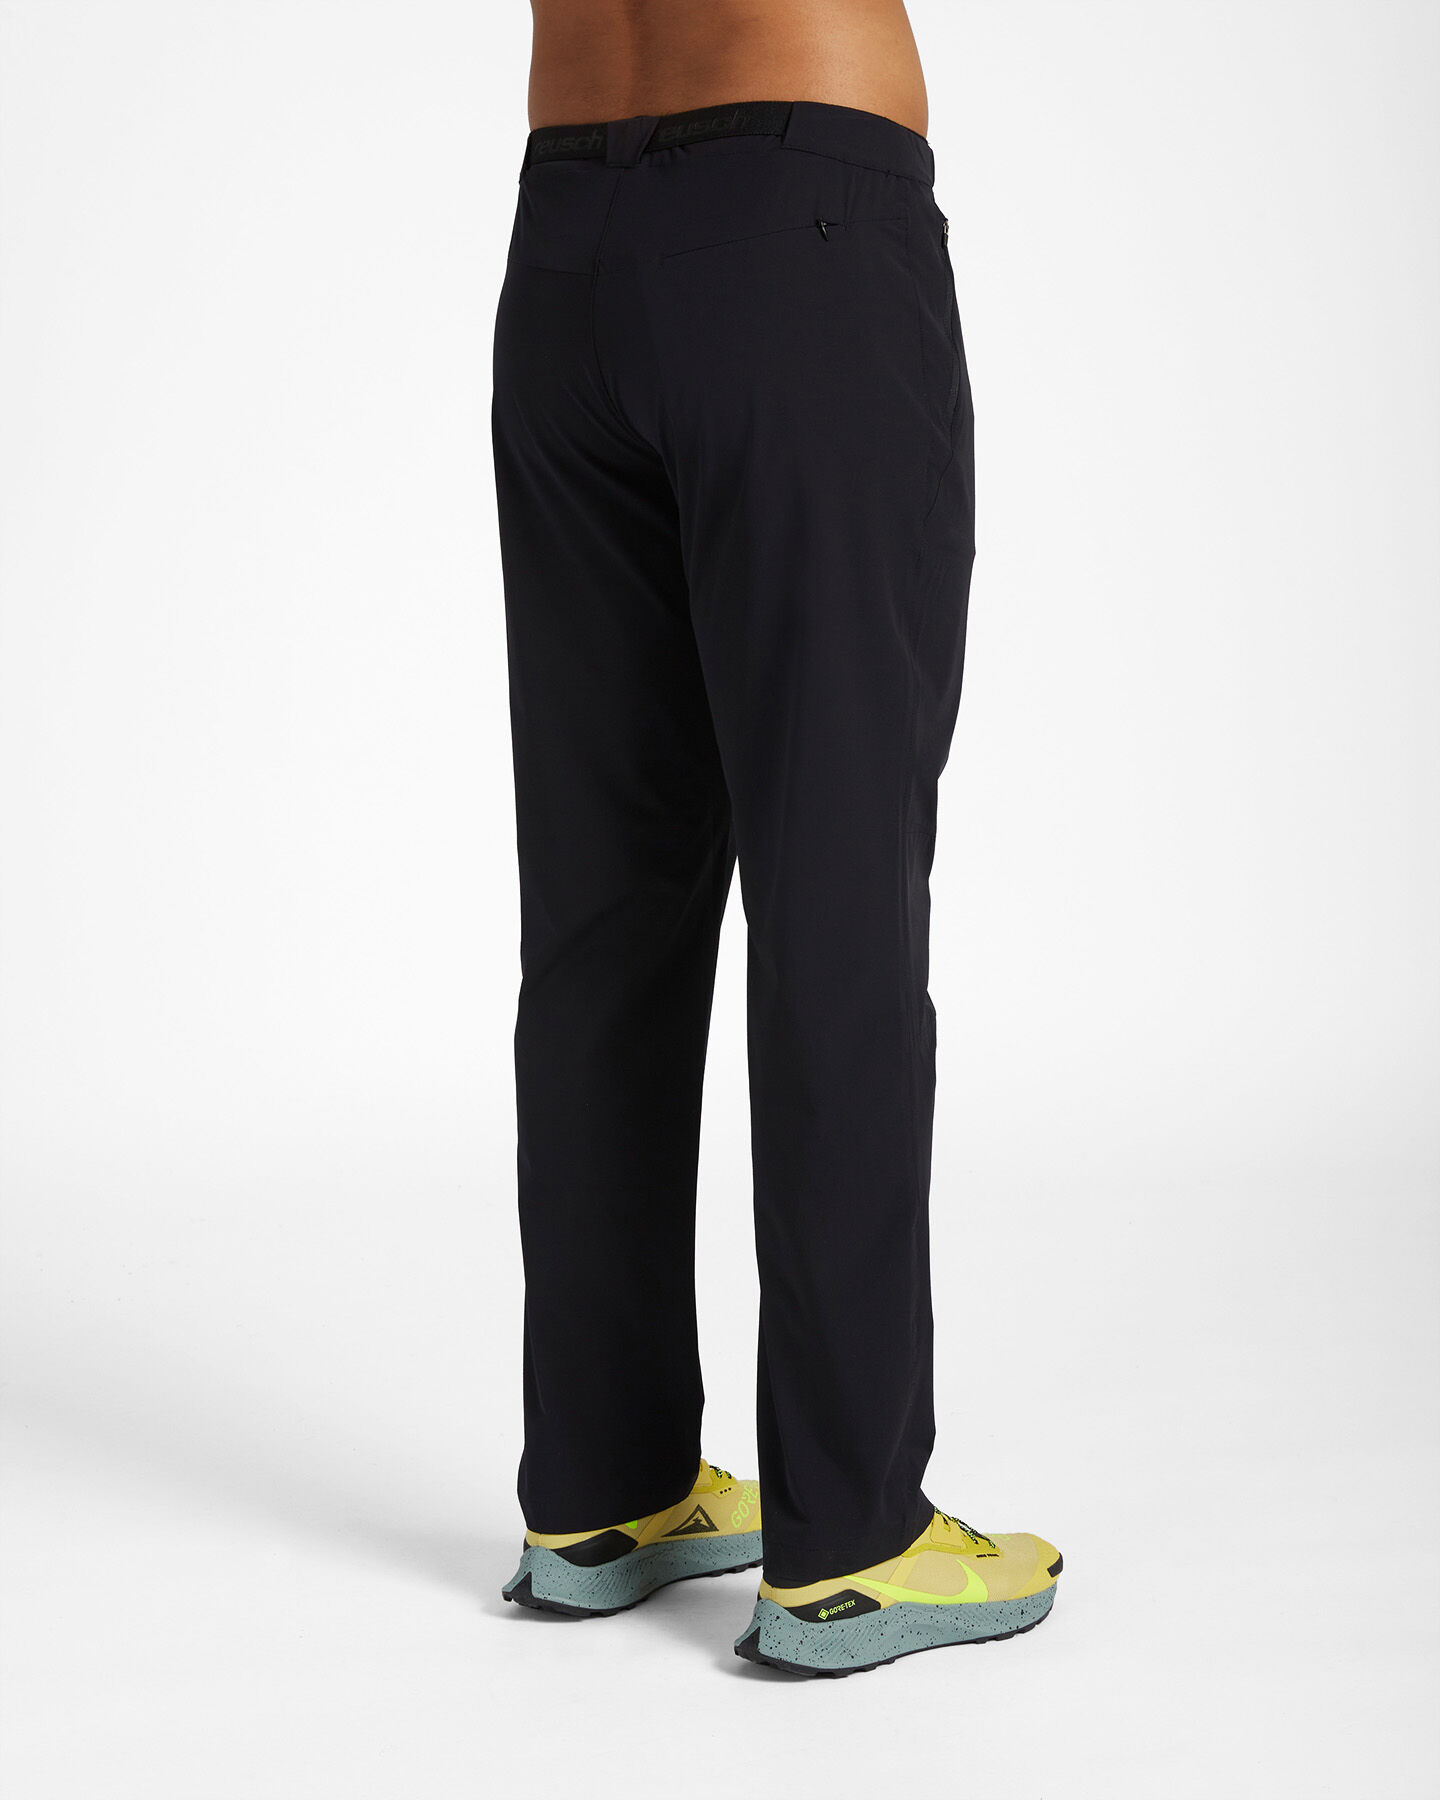  Pantalone outdoor REUSCH SUPER COMFORT M S4102781|995|L scatto 1